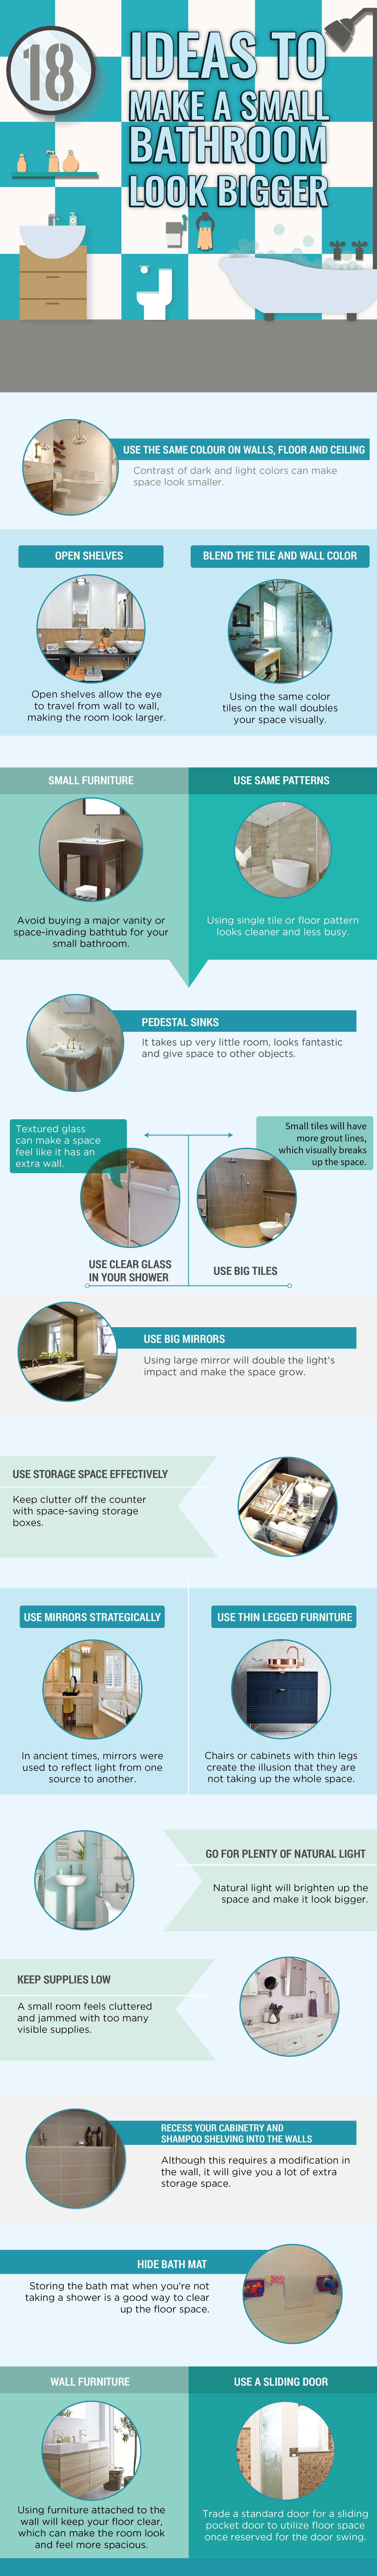 18 ideas to make a small bathroom look bigger